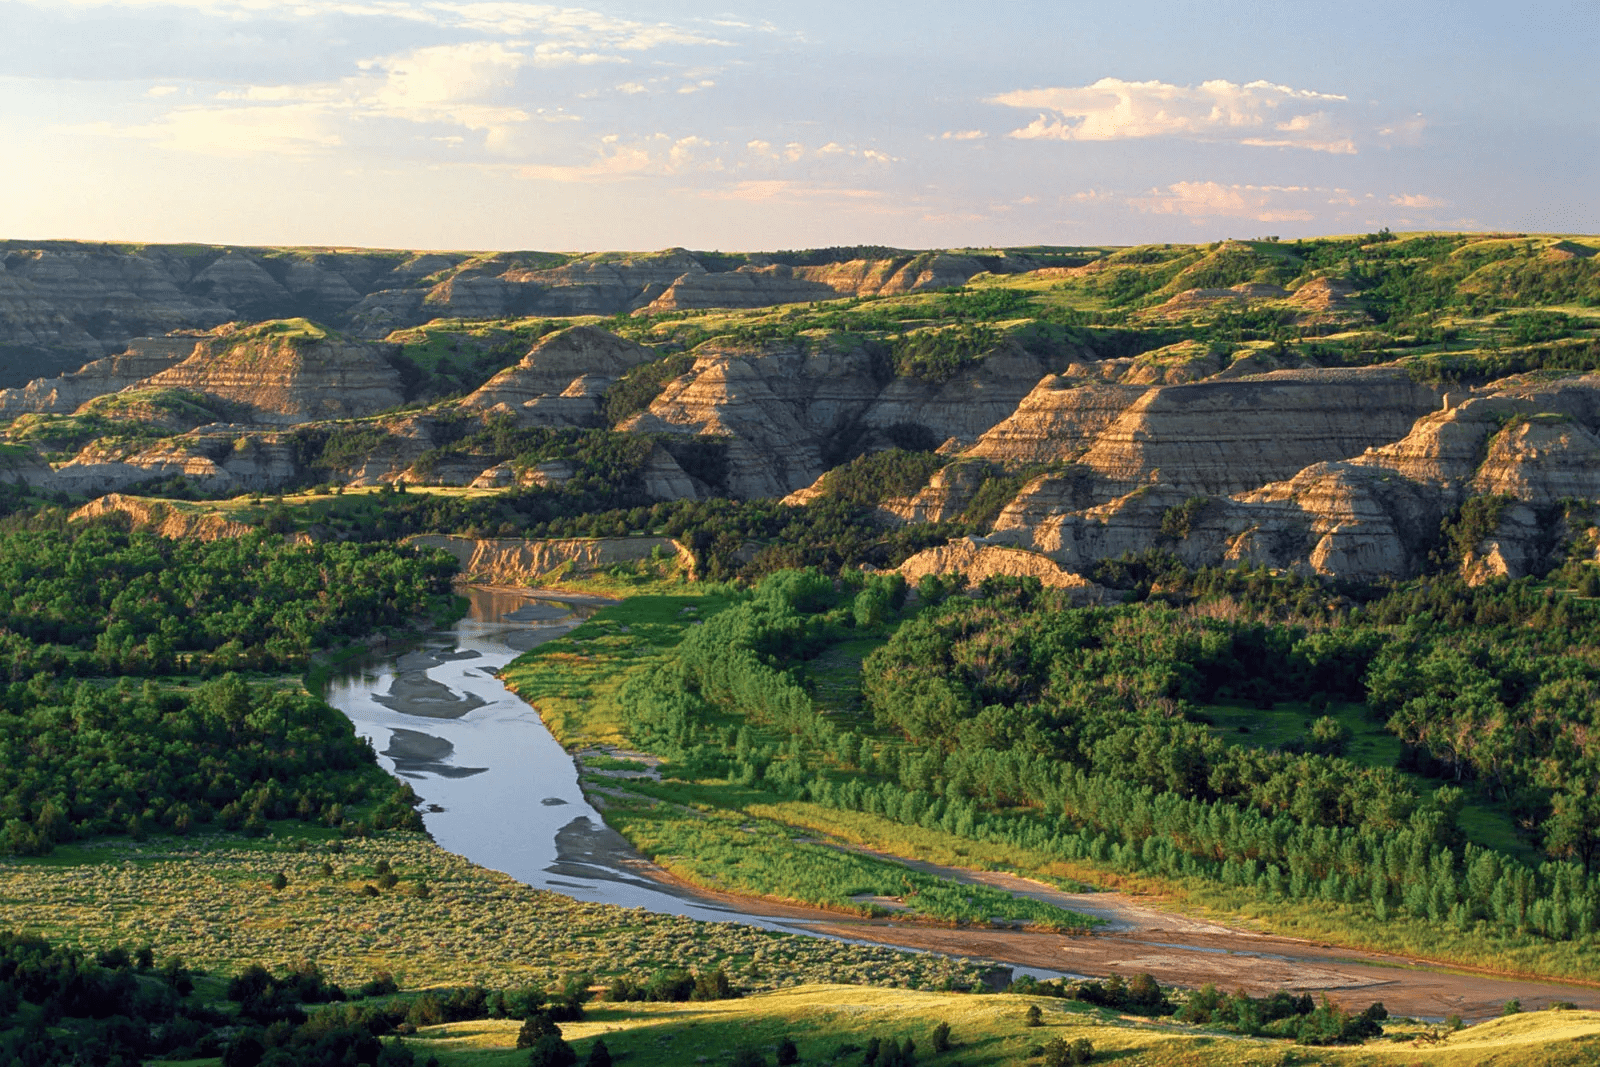 North Dakota National Parks